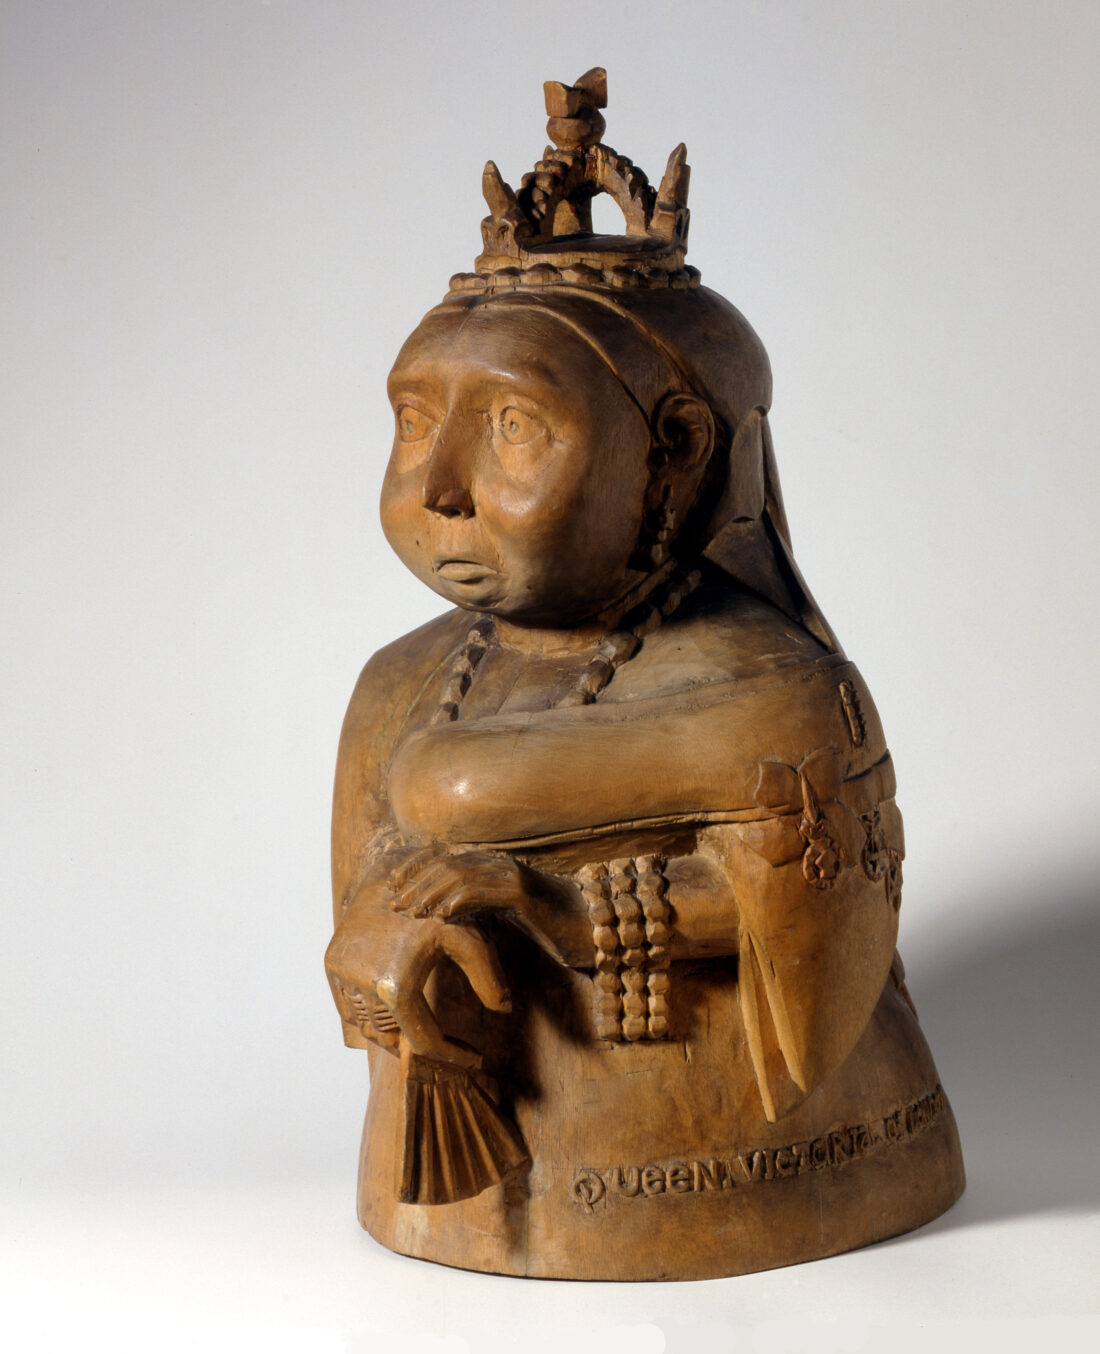 Queen Victoria as a wooden figure